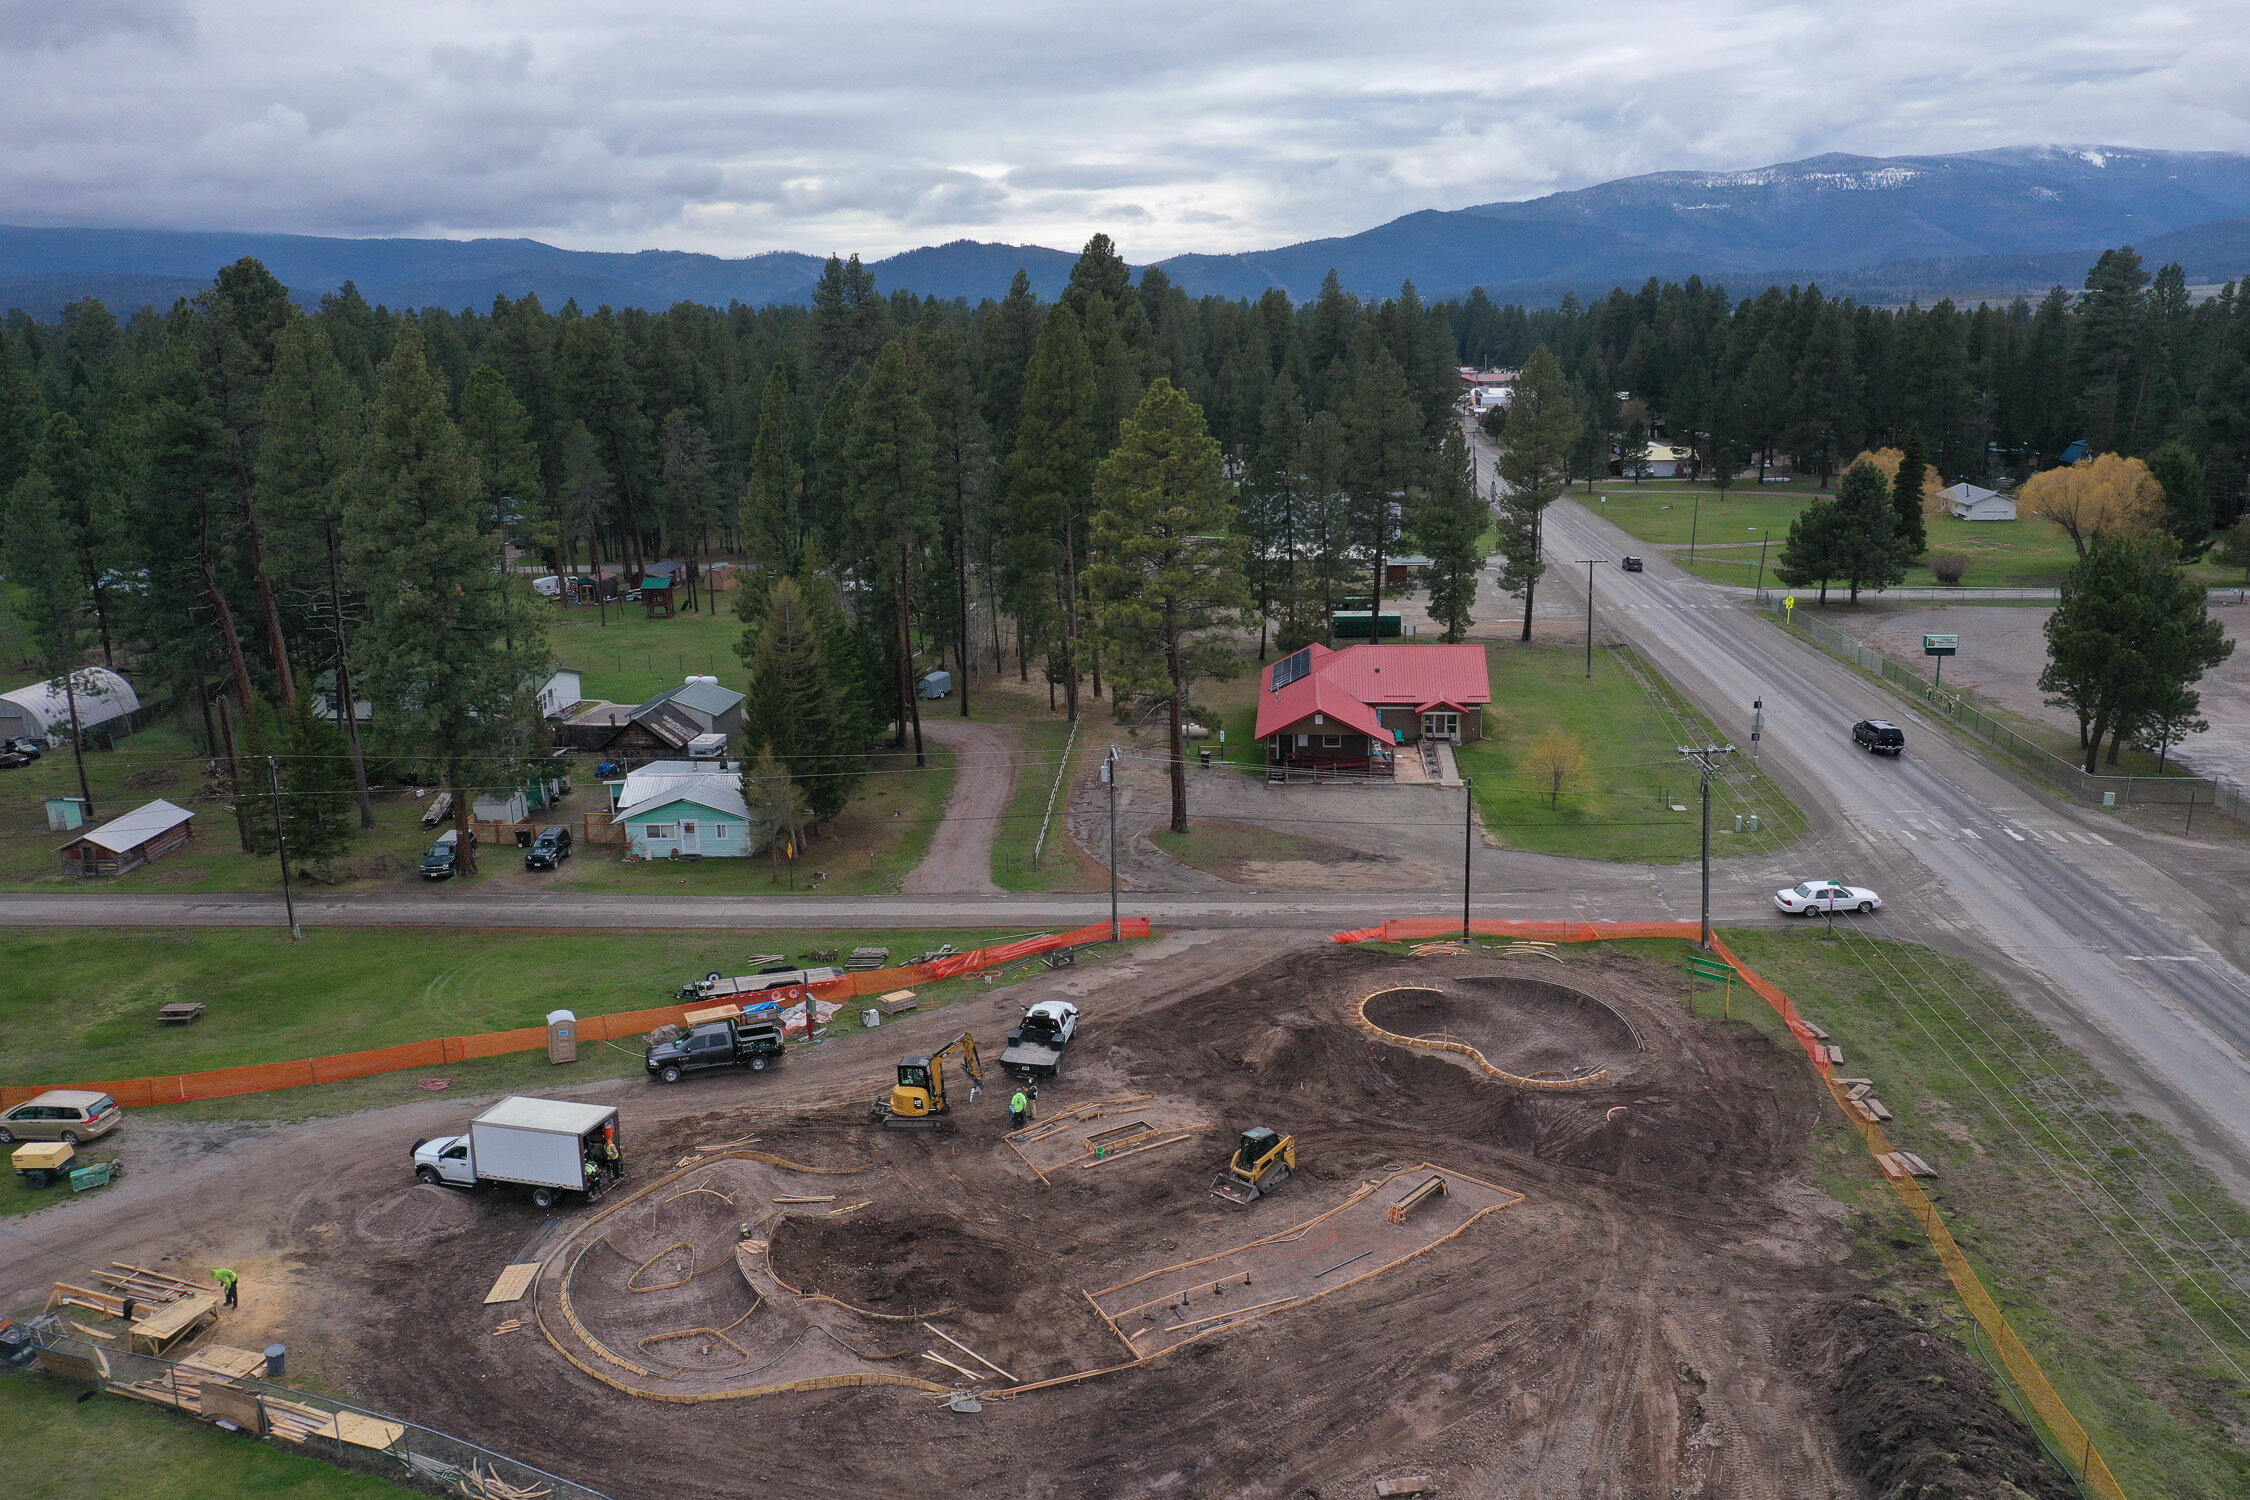 Lincoln, Montana #skateparkconstruction 😎